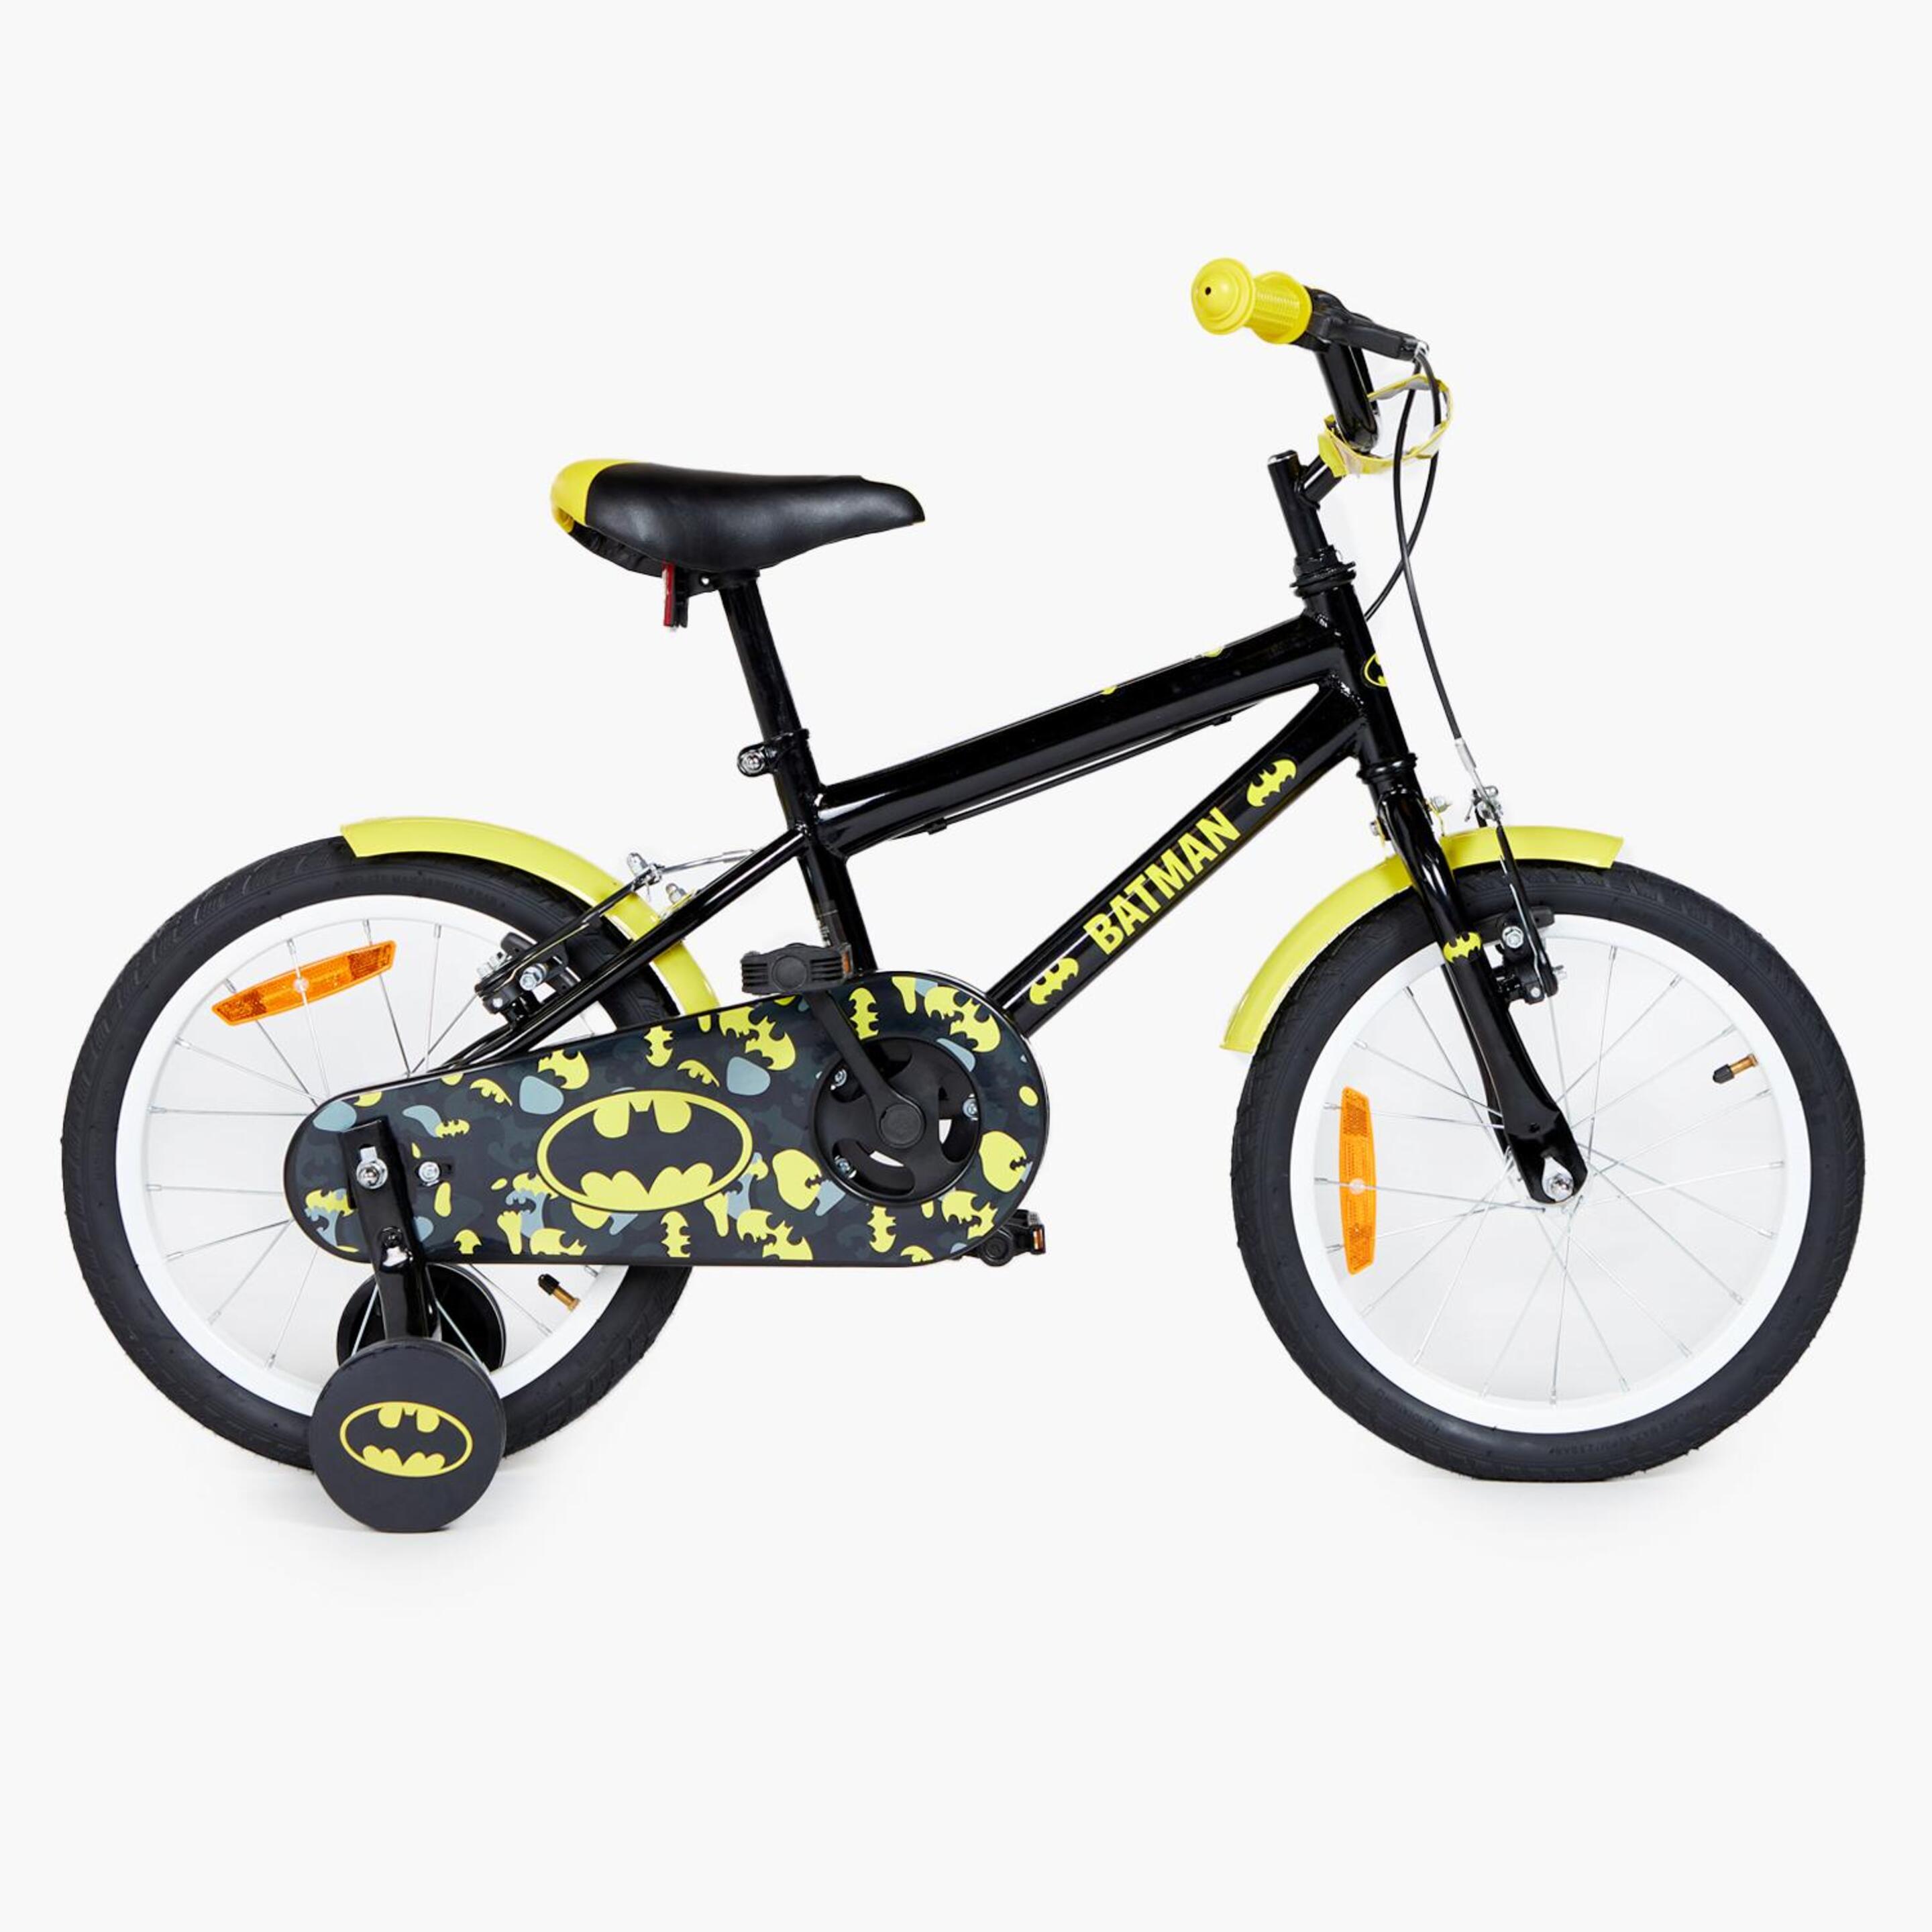 Bicicleta Batman 16" - Preto - Bicicleta Criança | Sport Zone